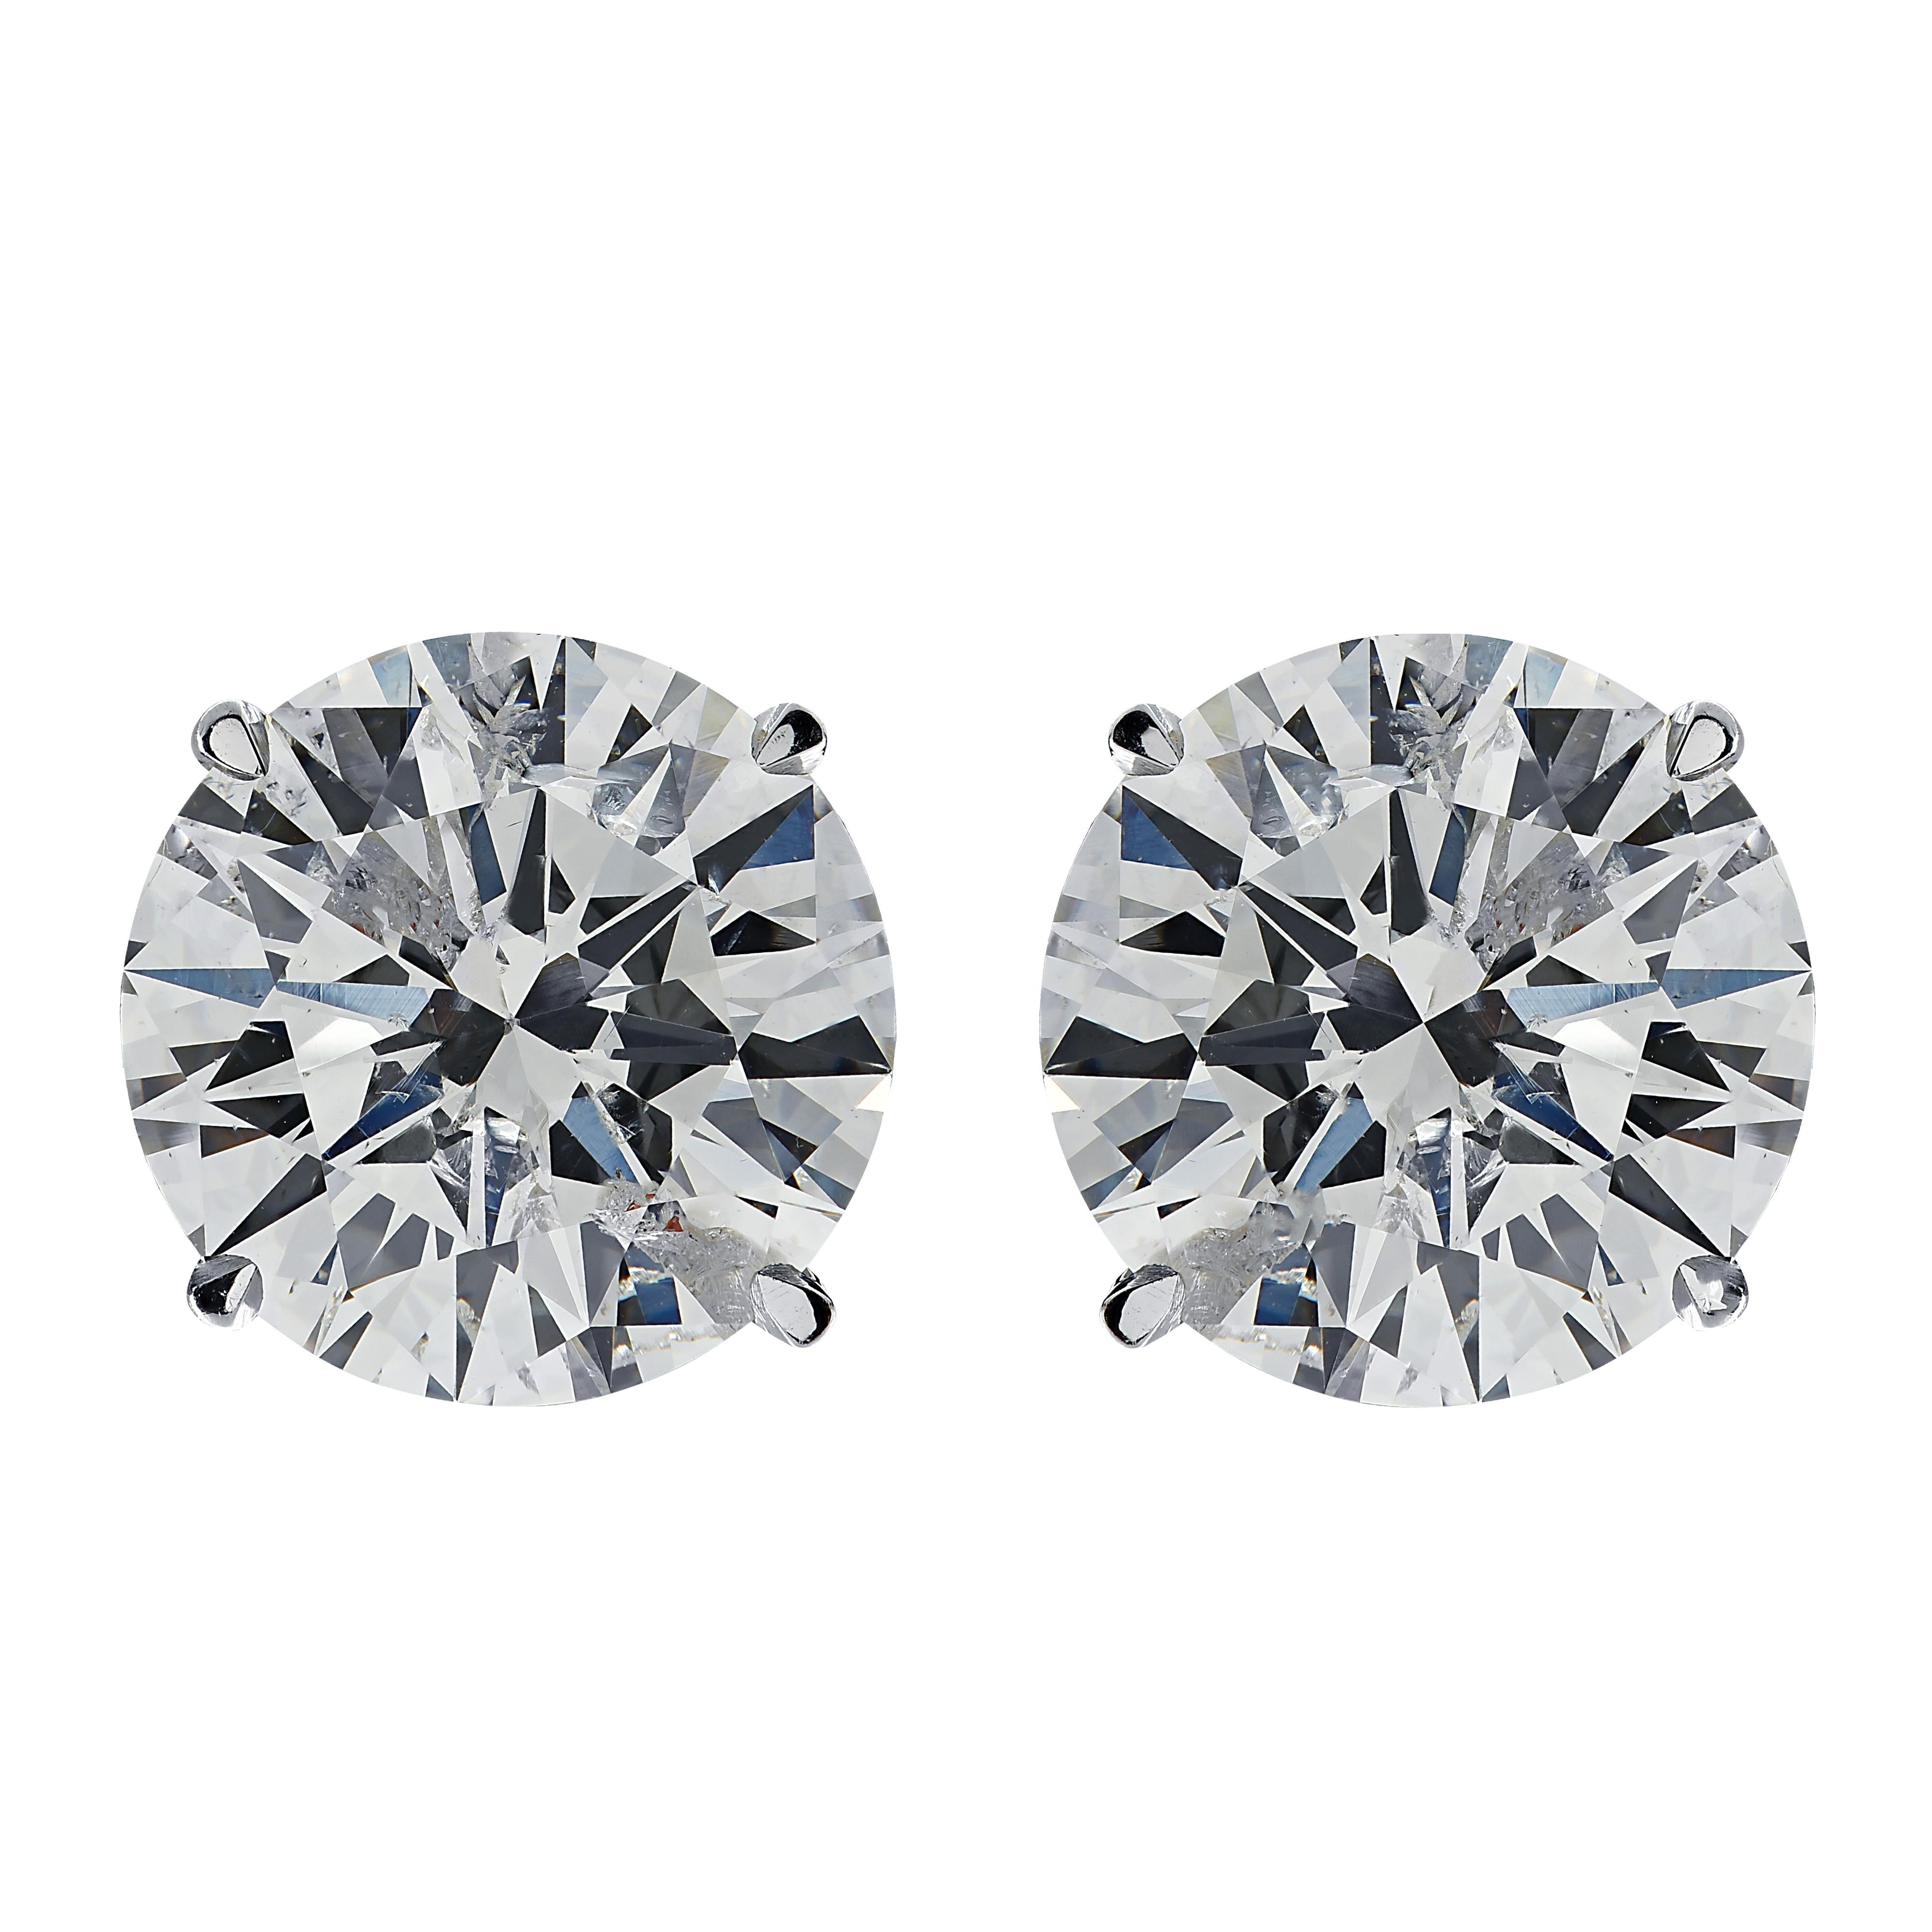 Modern Vivid Diamonds GIA Certified 3.57 Carat Diamond Solitaire Stud Earrings For Sale